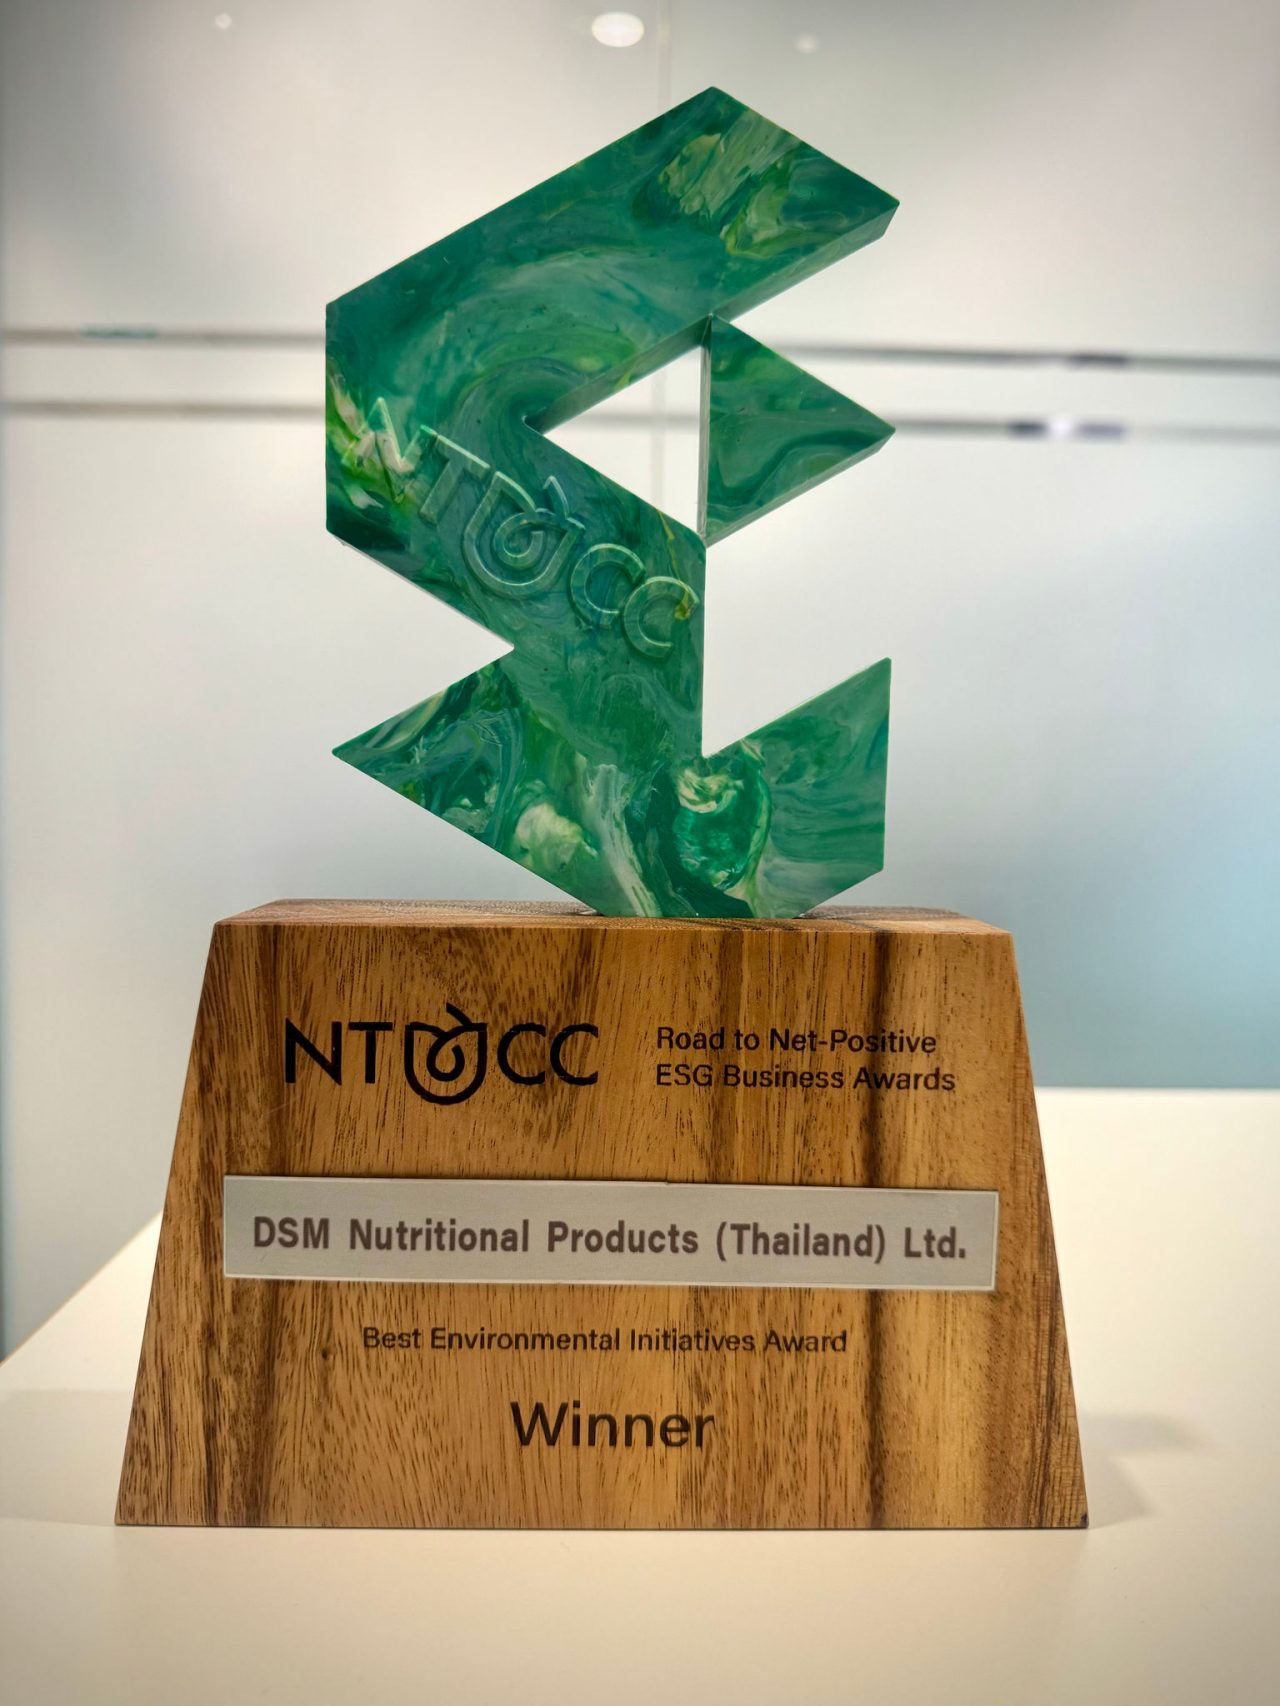 The NTCC “Best Environmental Initiatives Award”